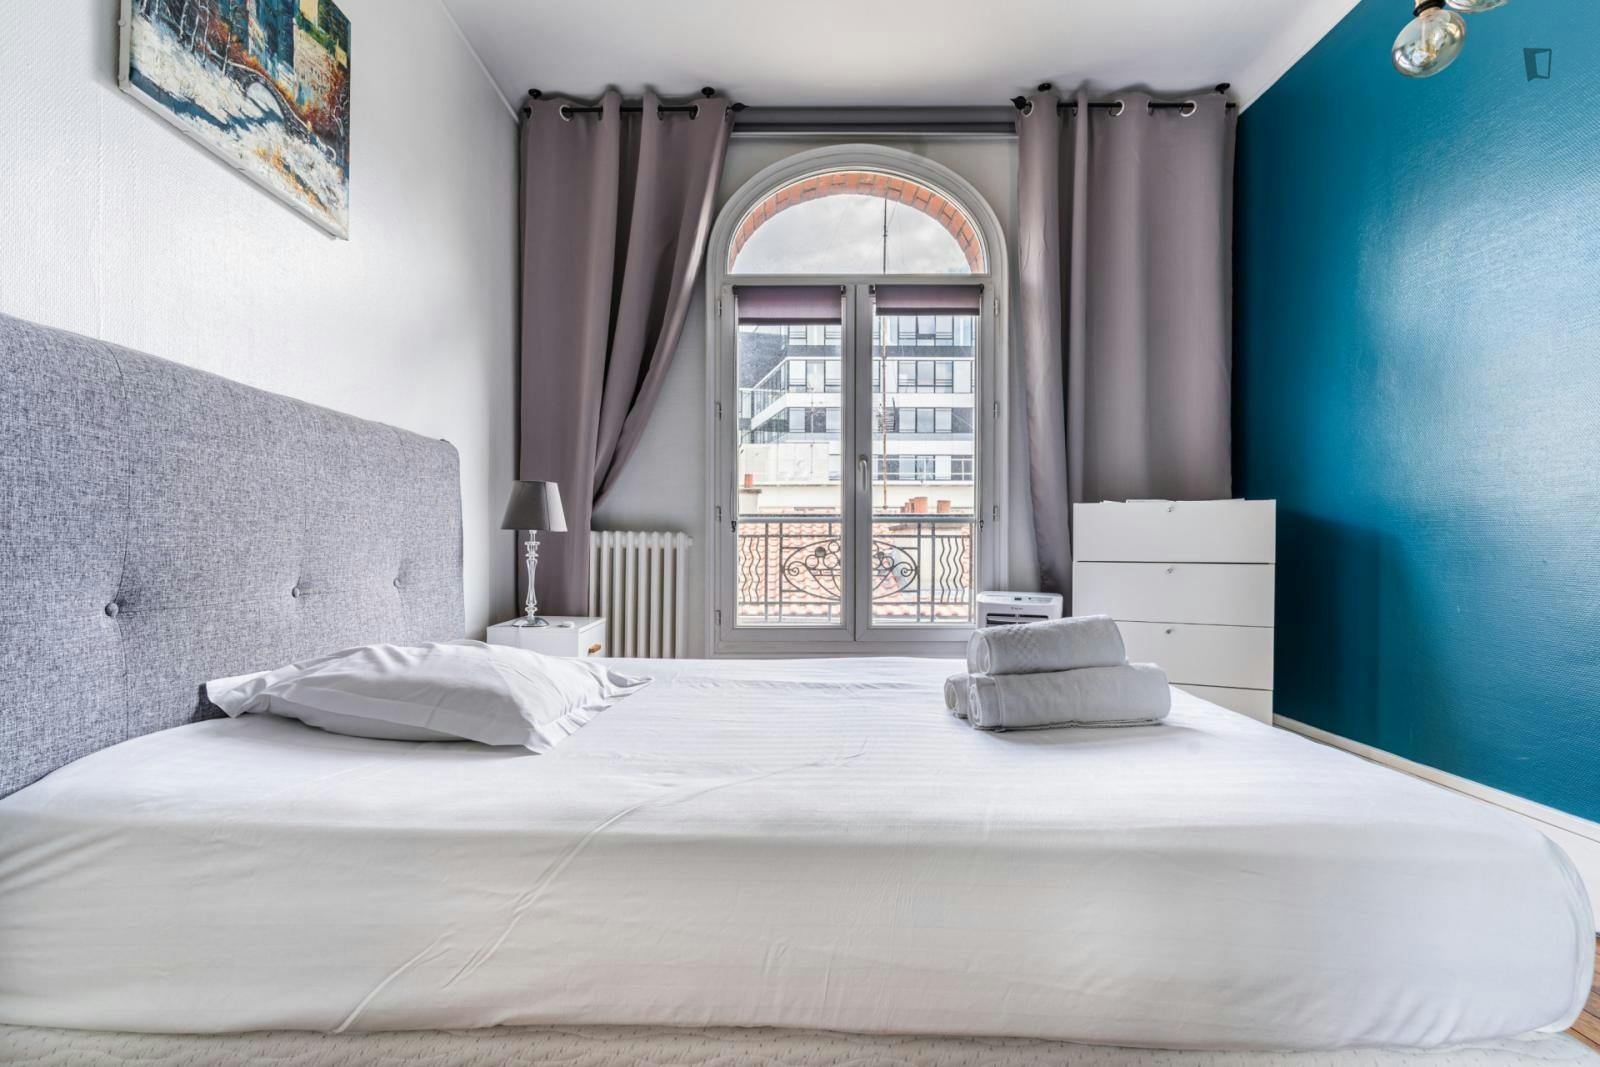 Charming 1-bedroom apartment near Clichy - Levallois train station